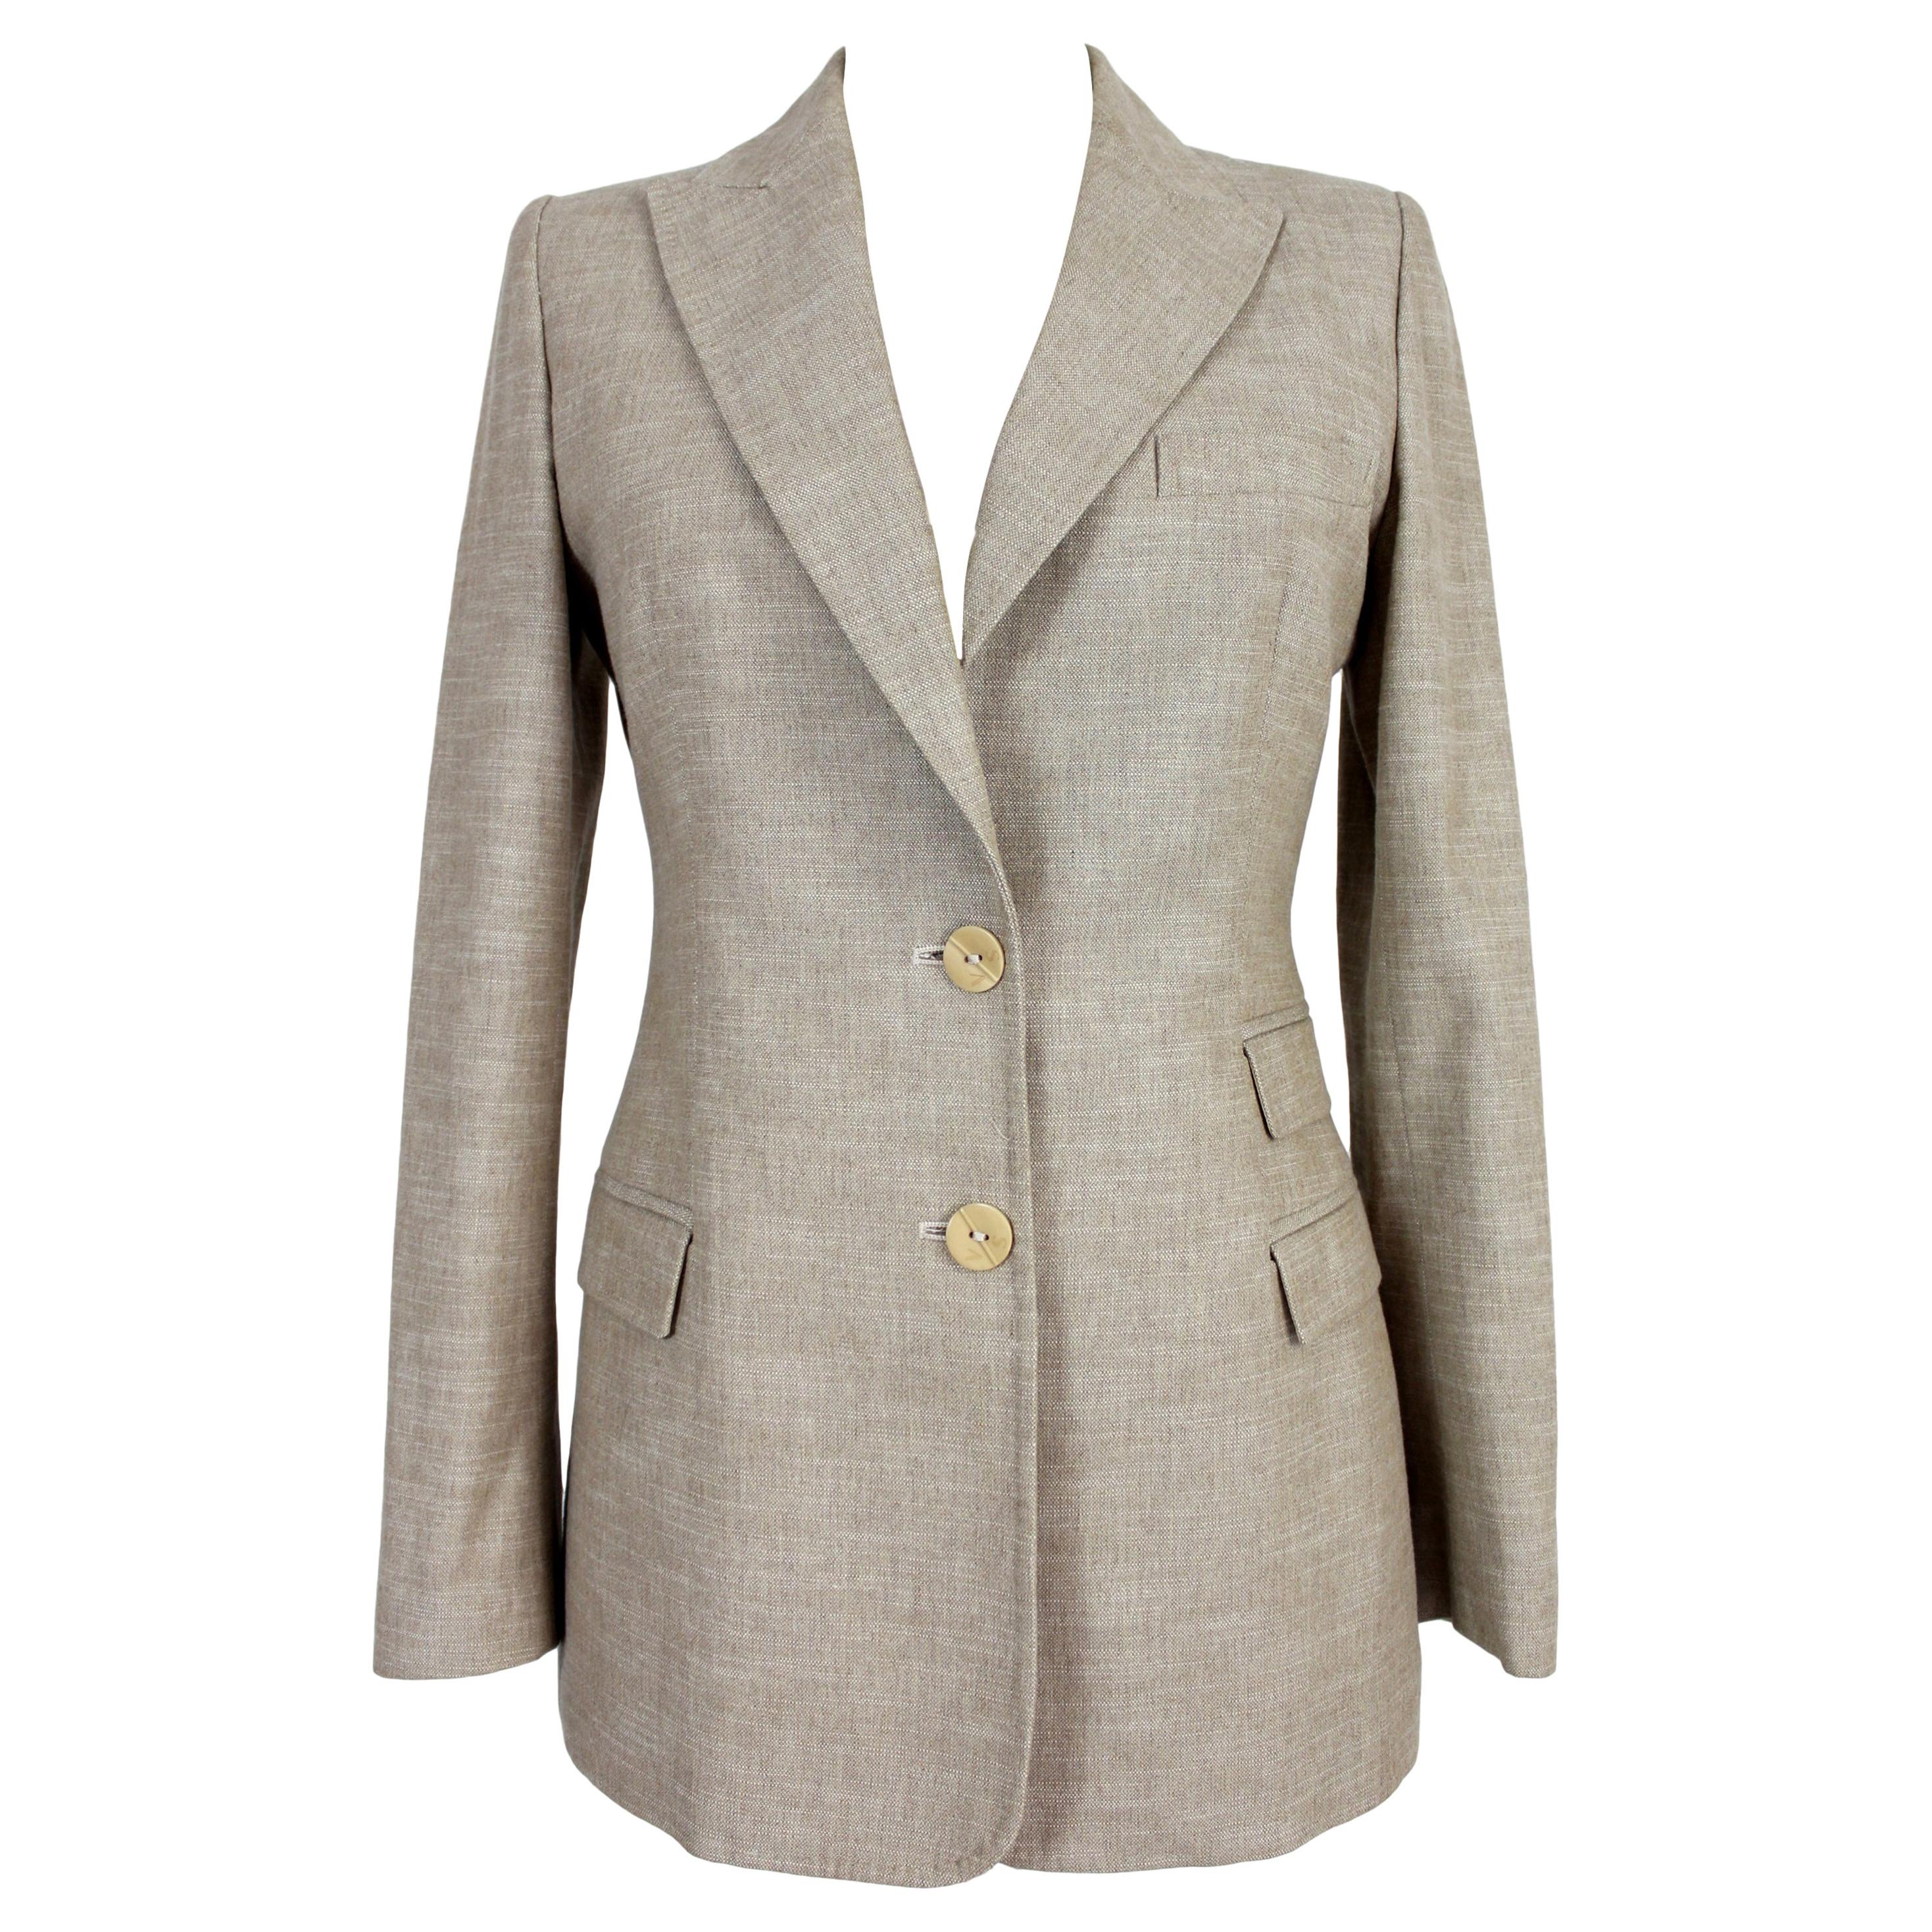 Versace Beige Cotton and Linen Rabbit Hair Insert Slim Fit Blazers Jacket 1990s 